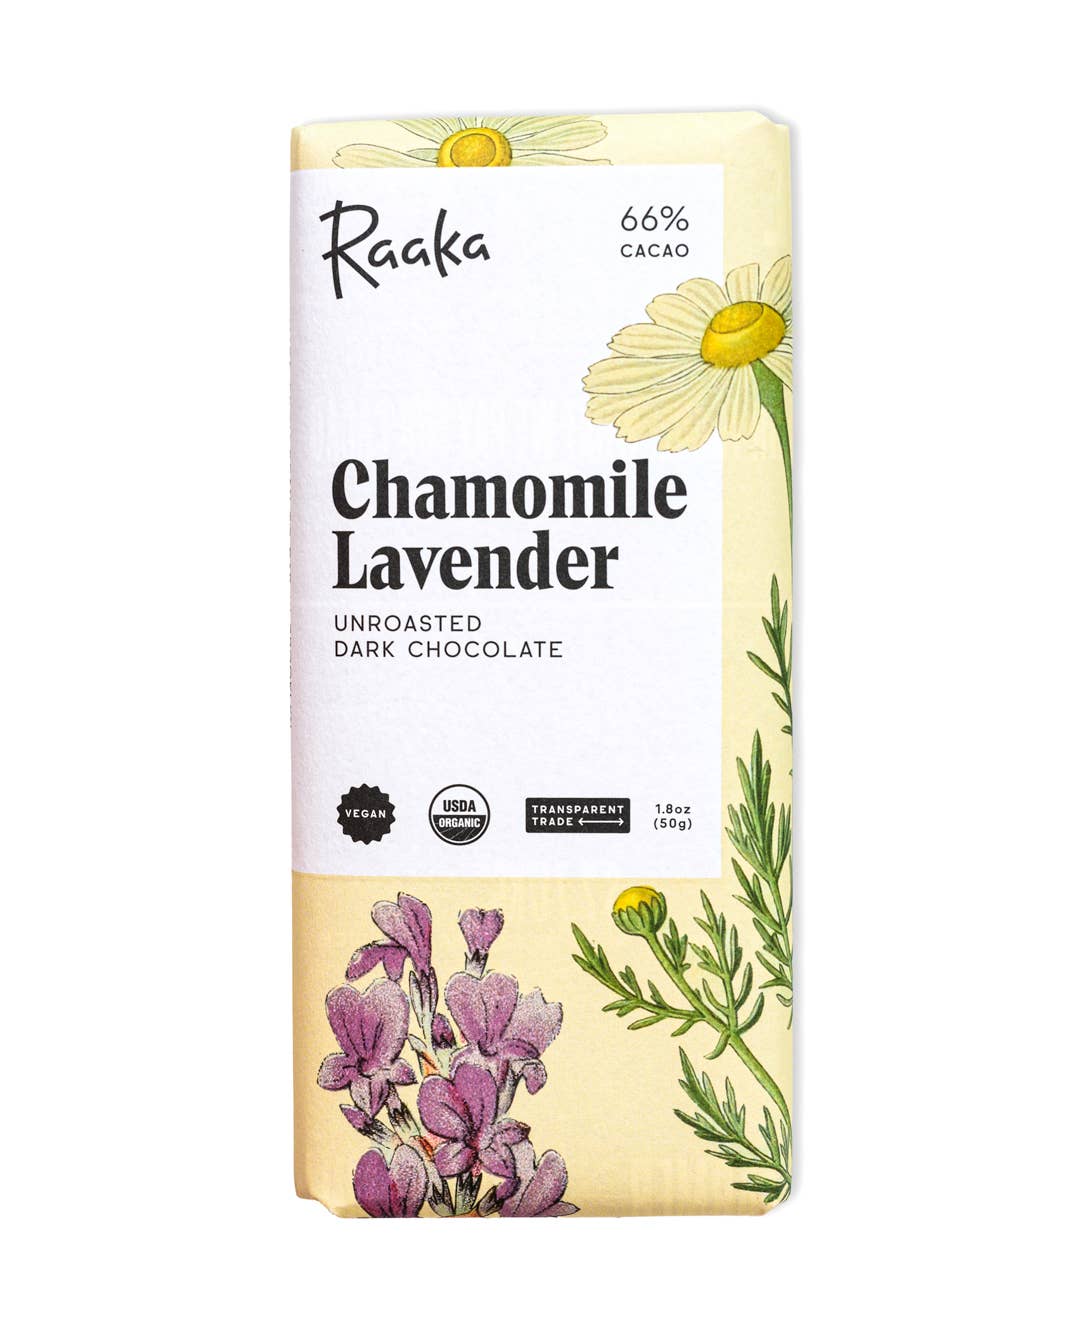 Raaka 66% Chamomile Lavender Bar - Spring Easter Limited